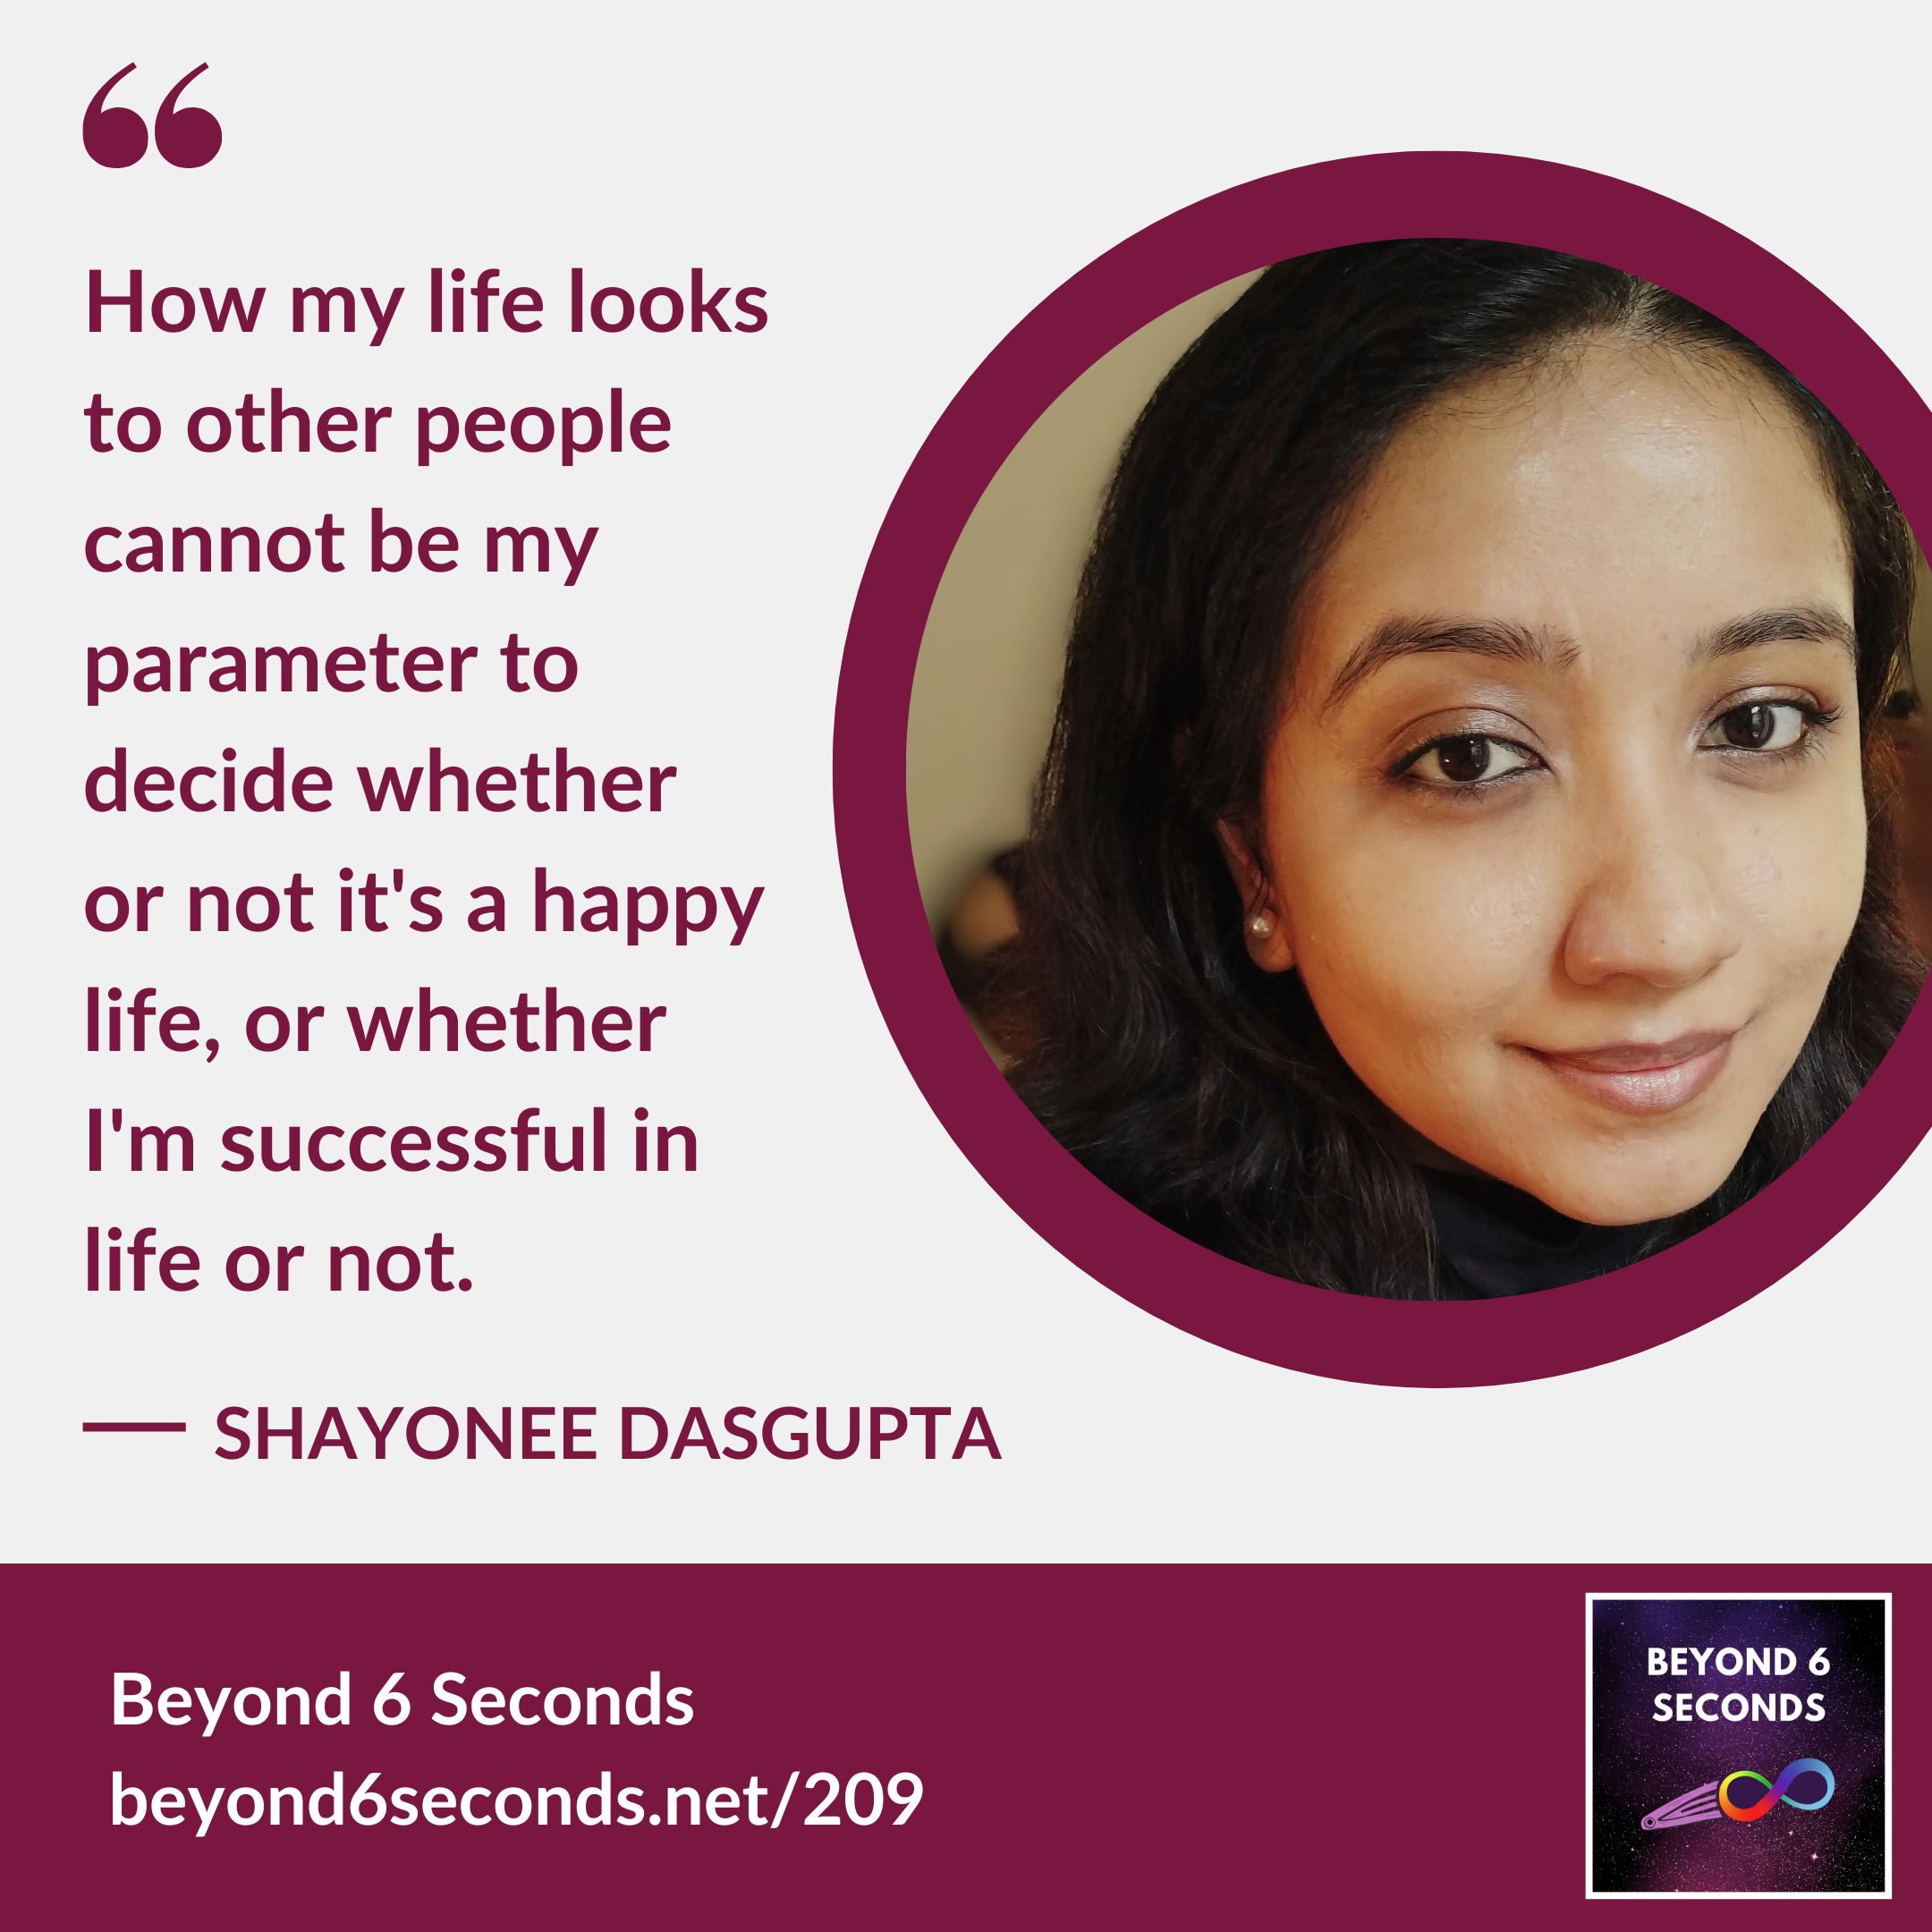 Shayonee Dasgupta